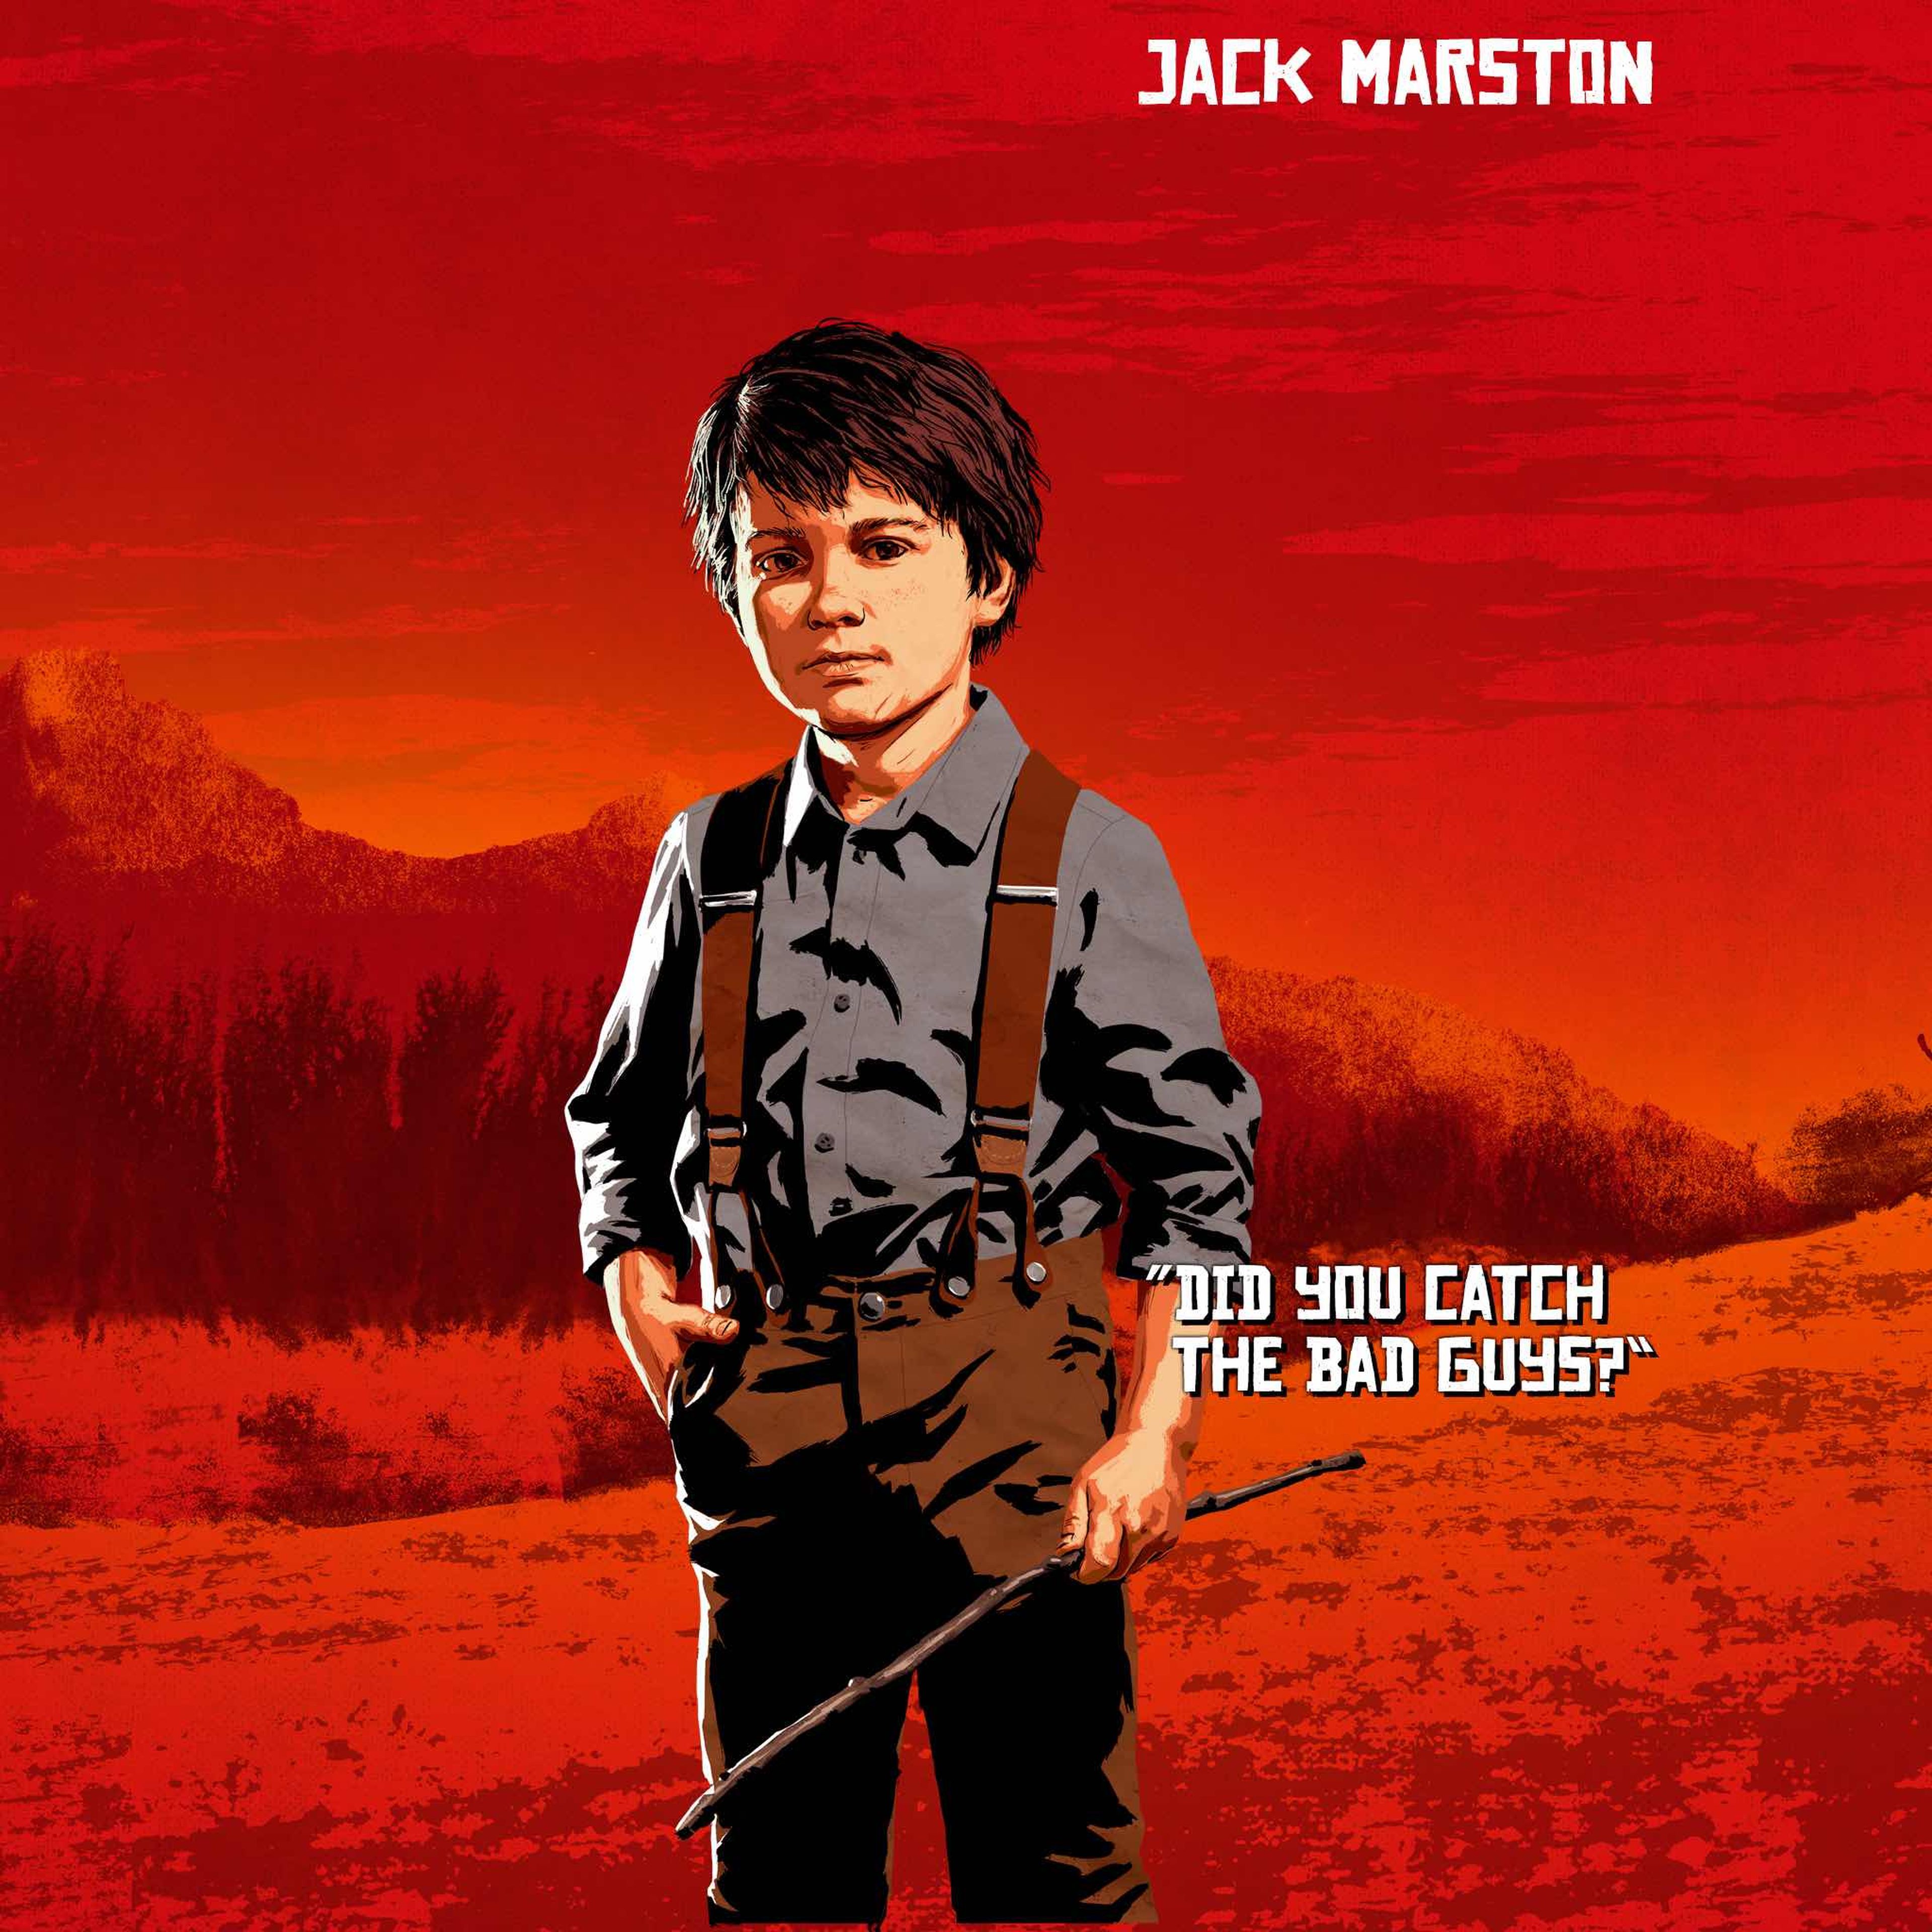 Jack Marston